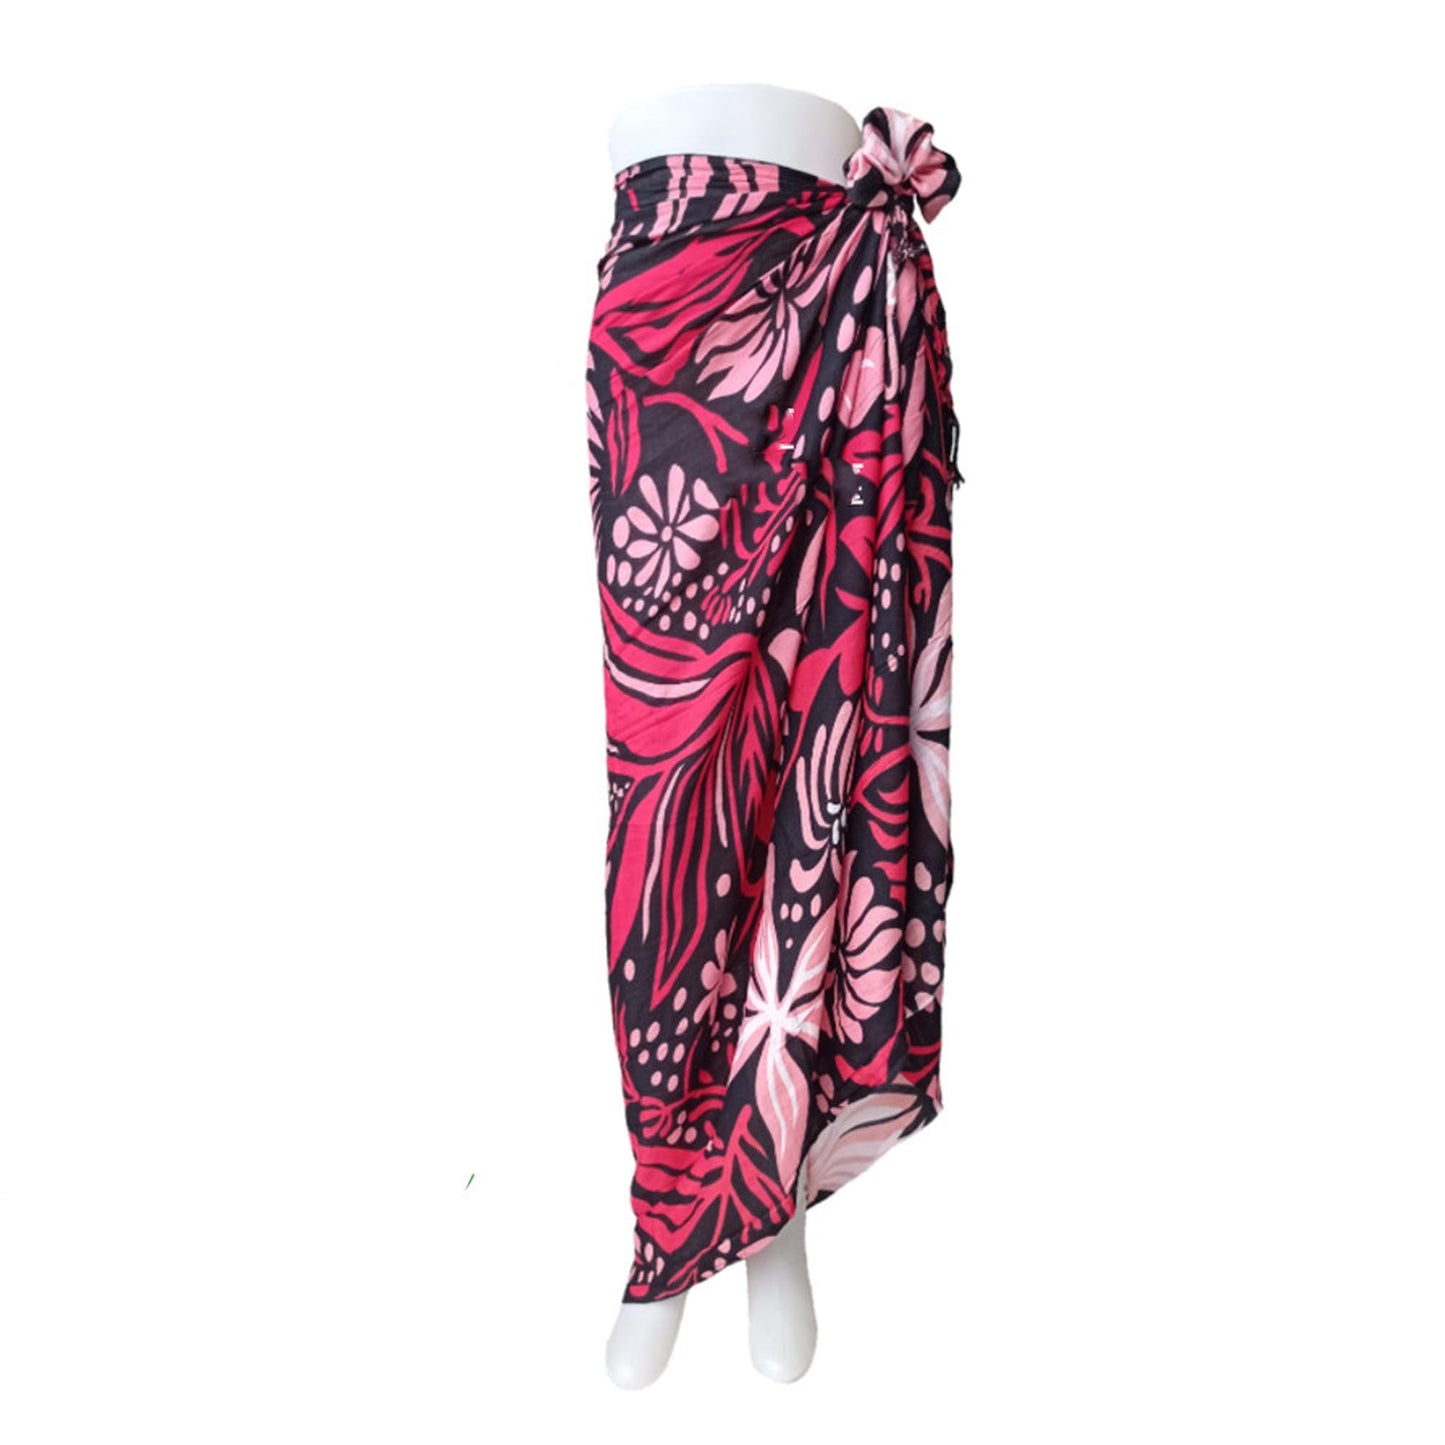 Beach Charm: Flower Motif Balinese Fabric for a Cheerful Holiday, Sarong, Beach Cover-Up, Balinese Beach Wrap, Beach Sarong, Pareo